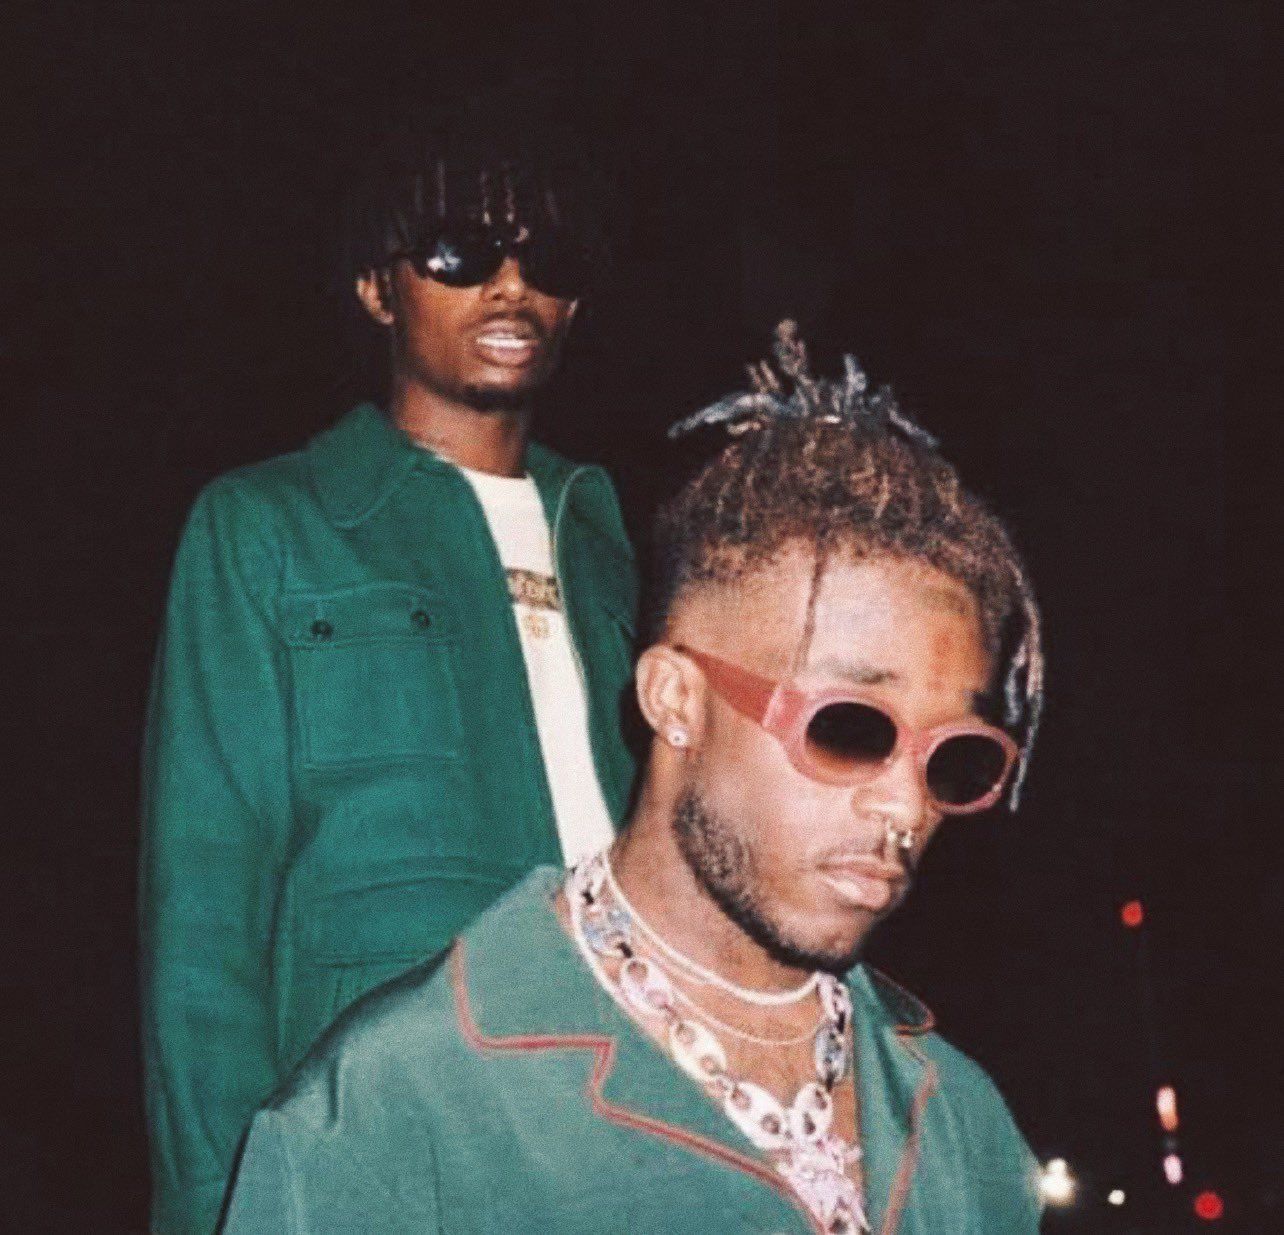 rap pics / vids Playboi Carti and Lil Uzi wearing sunglasses at night